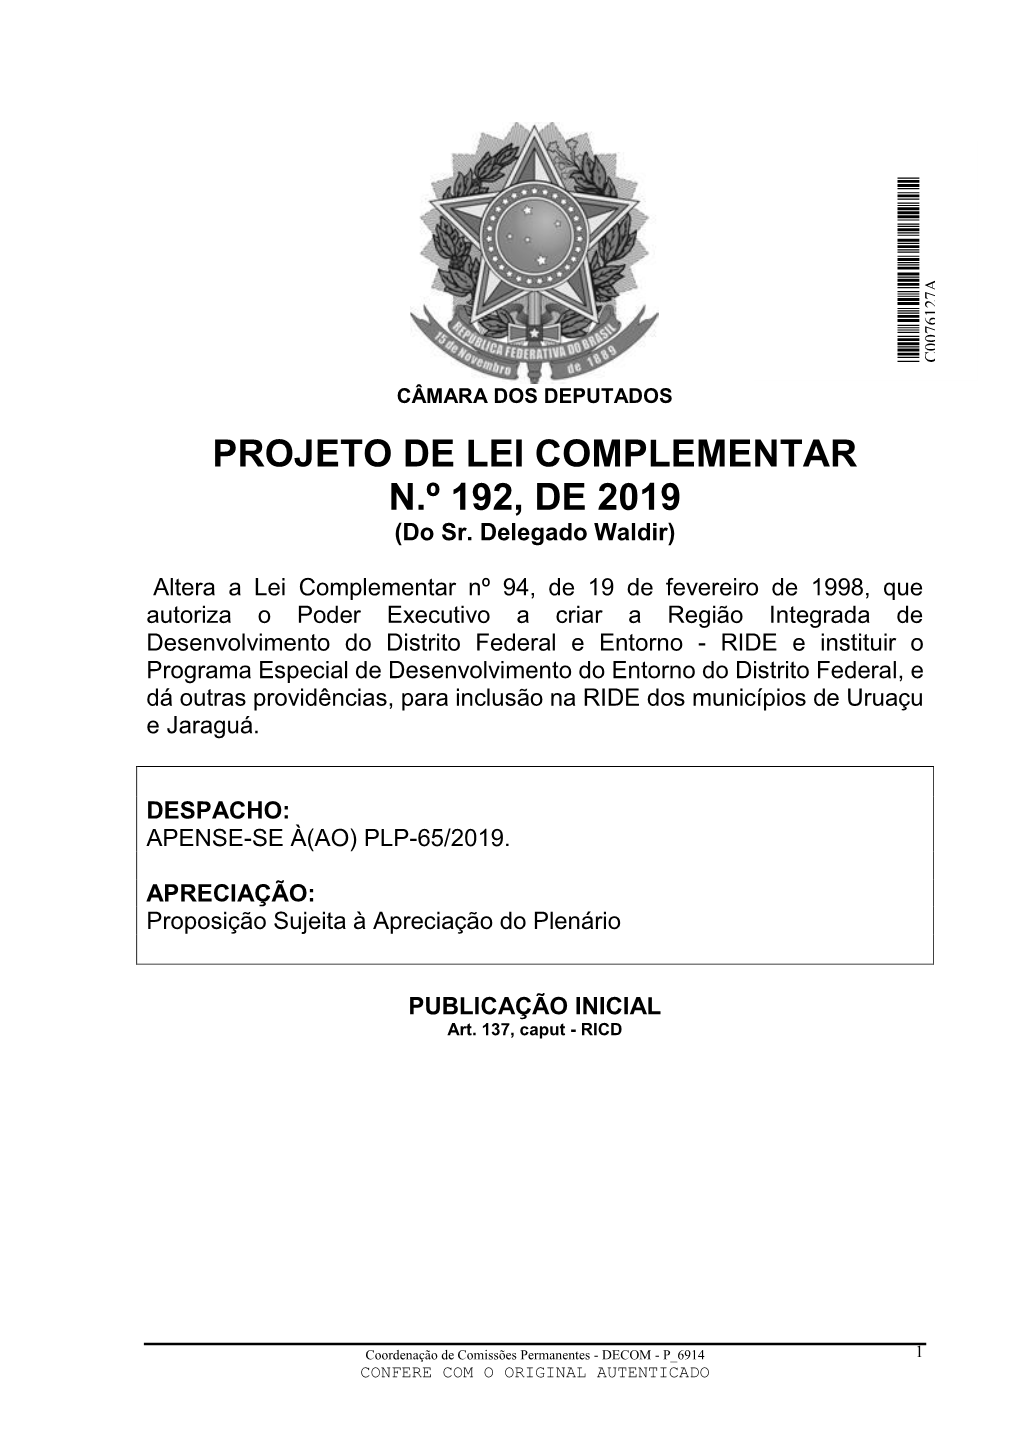 PROJETO DE LEI COMPLEMENTAR N.º 192, DE 2019 (Do Sr